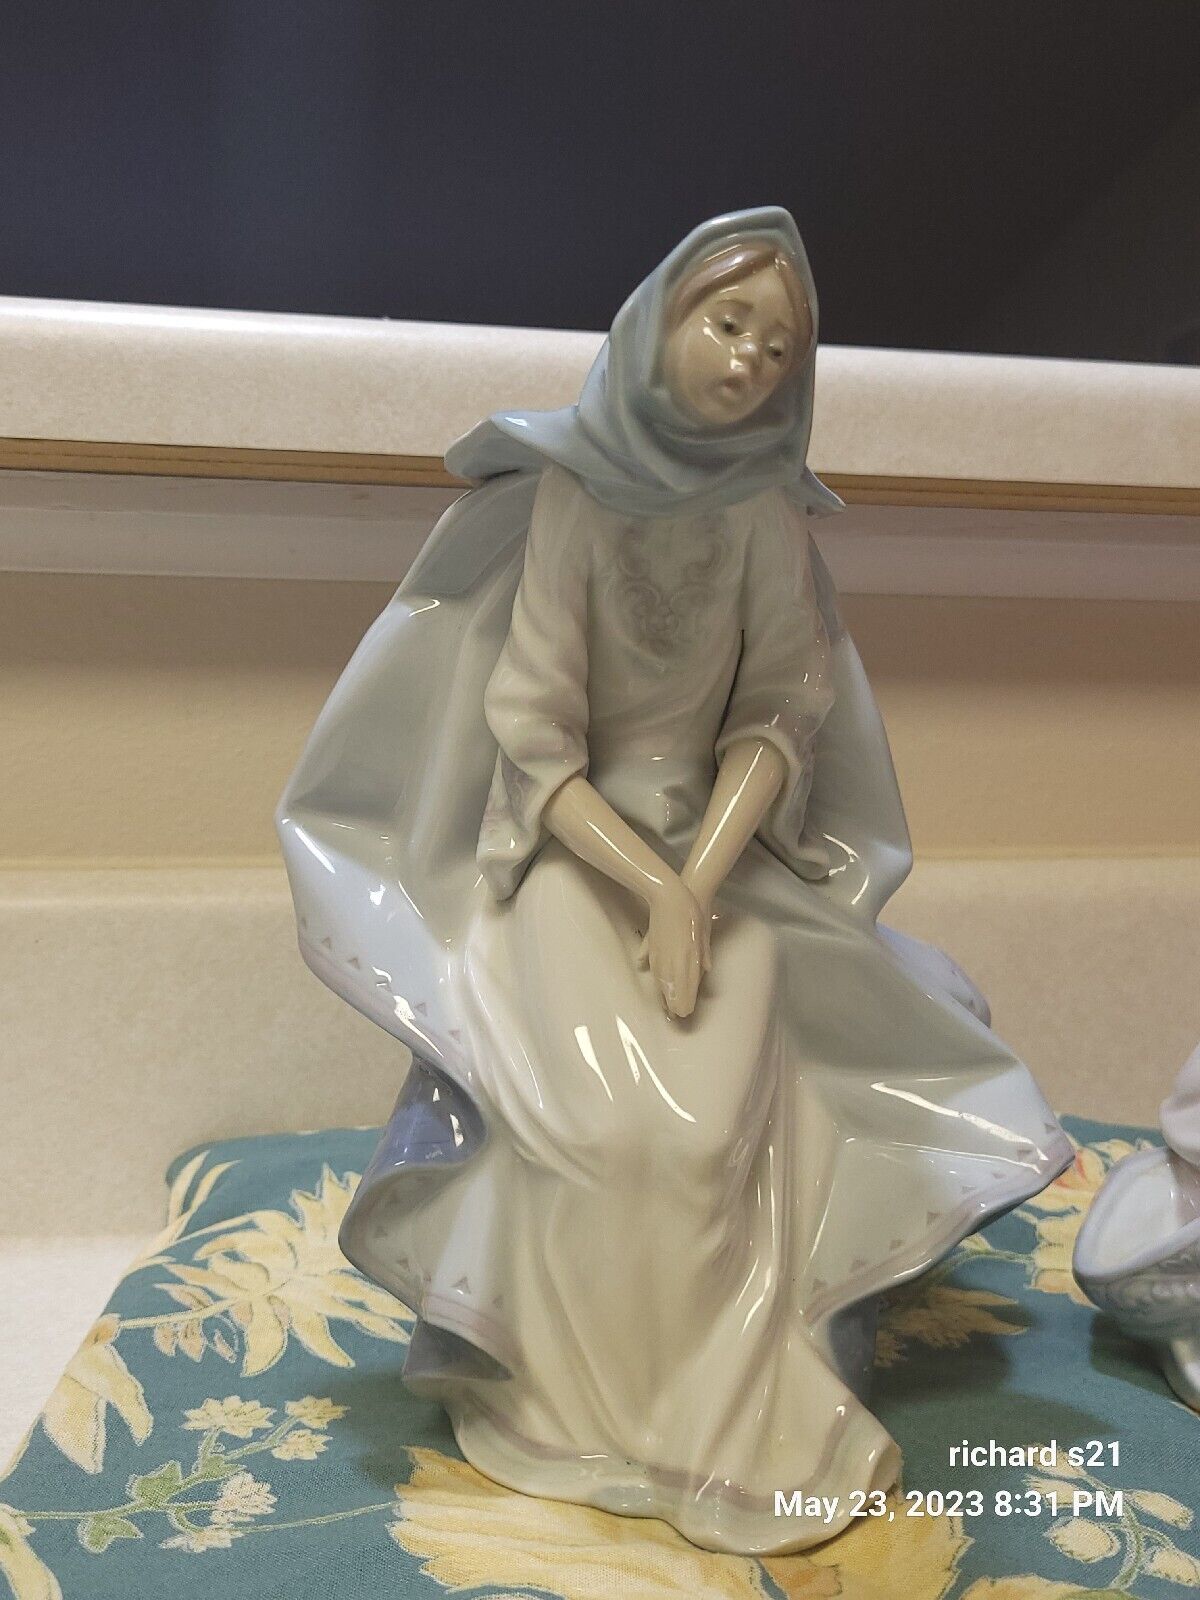 Exquisite Lladro 5747 Mary Nativity Figurine - Pristine Condition